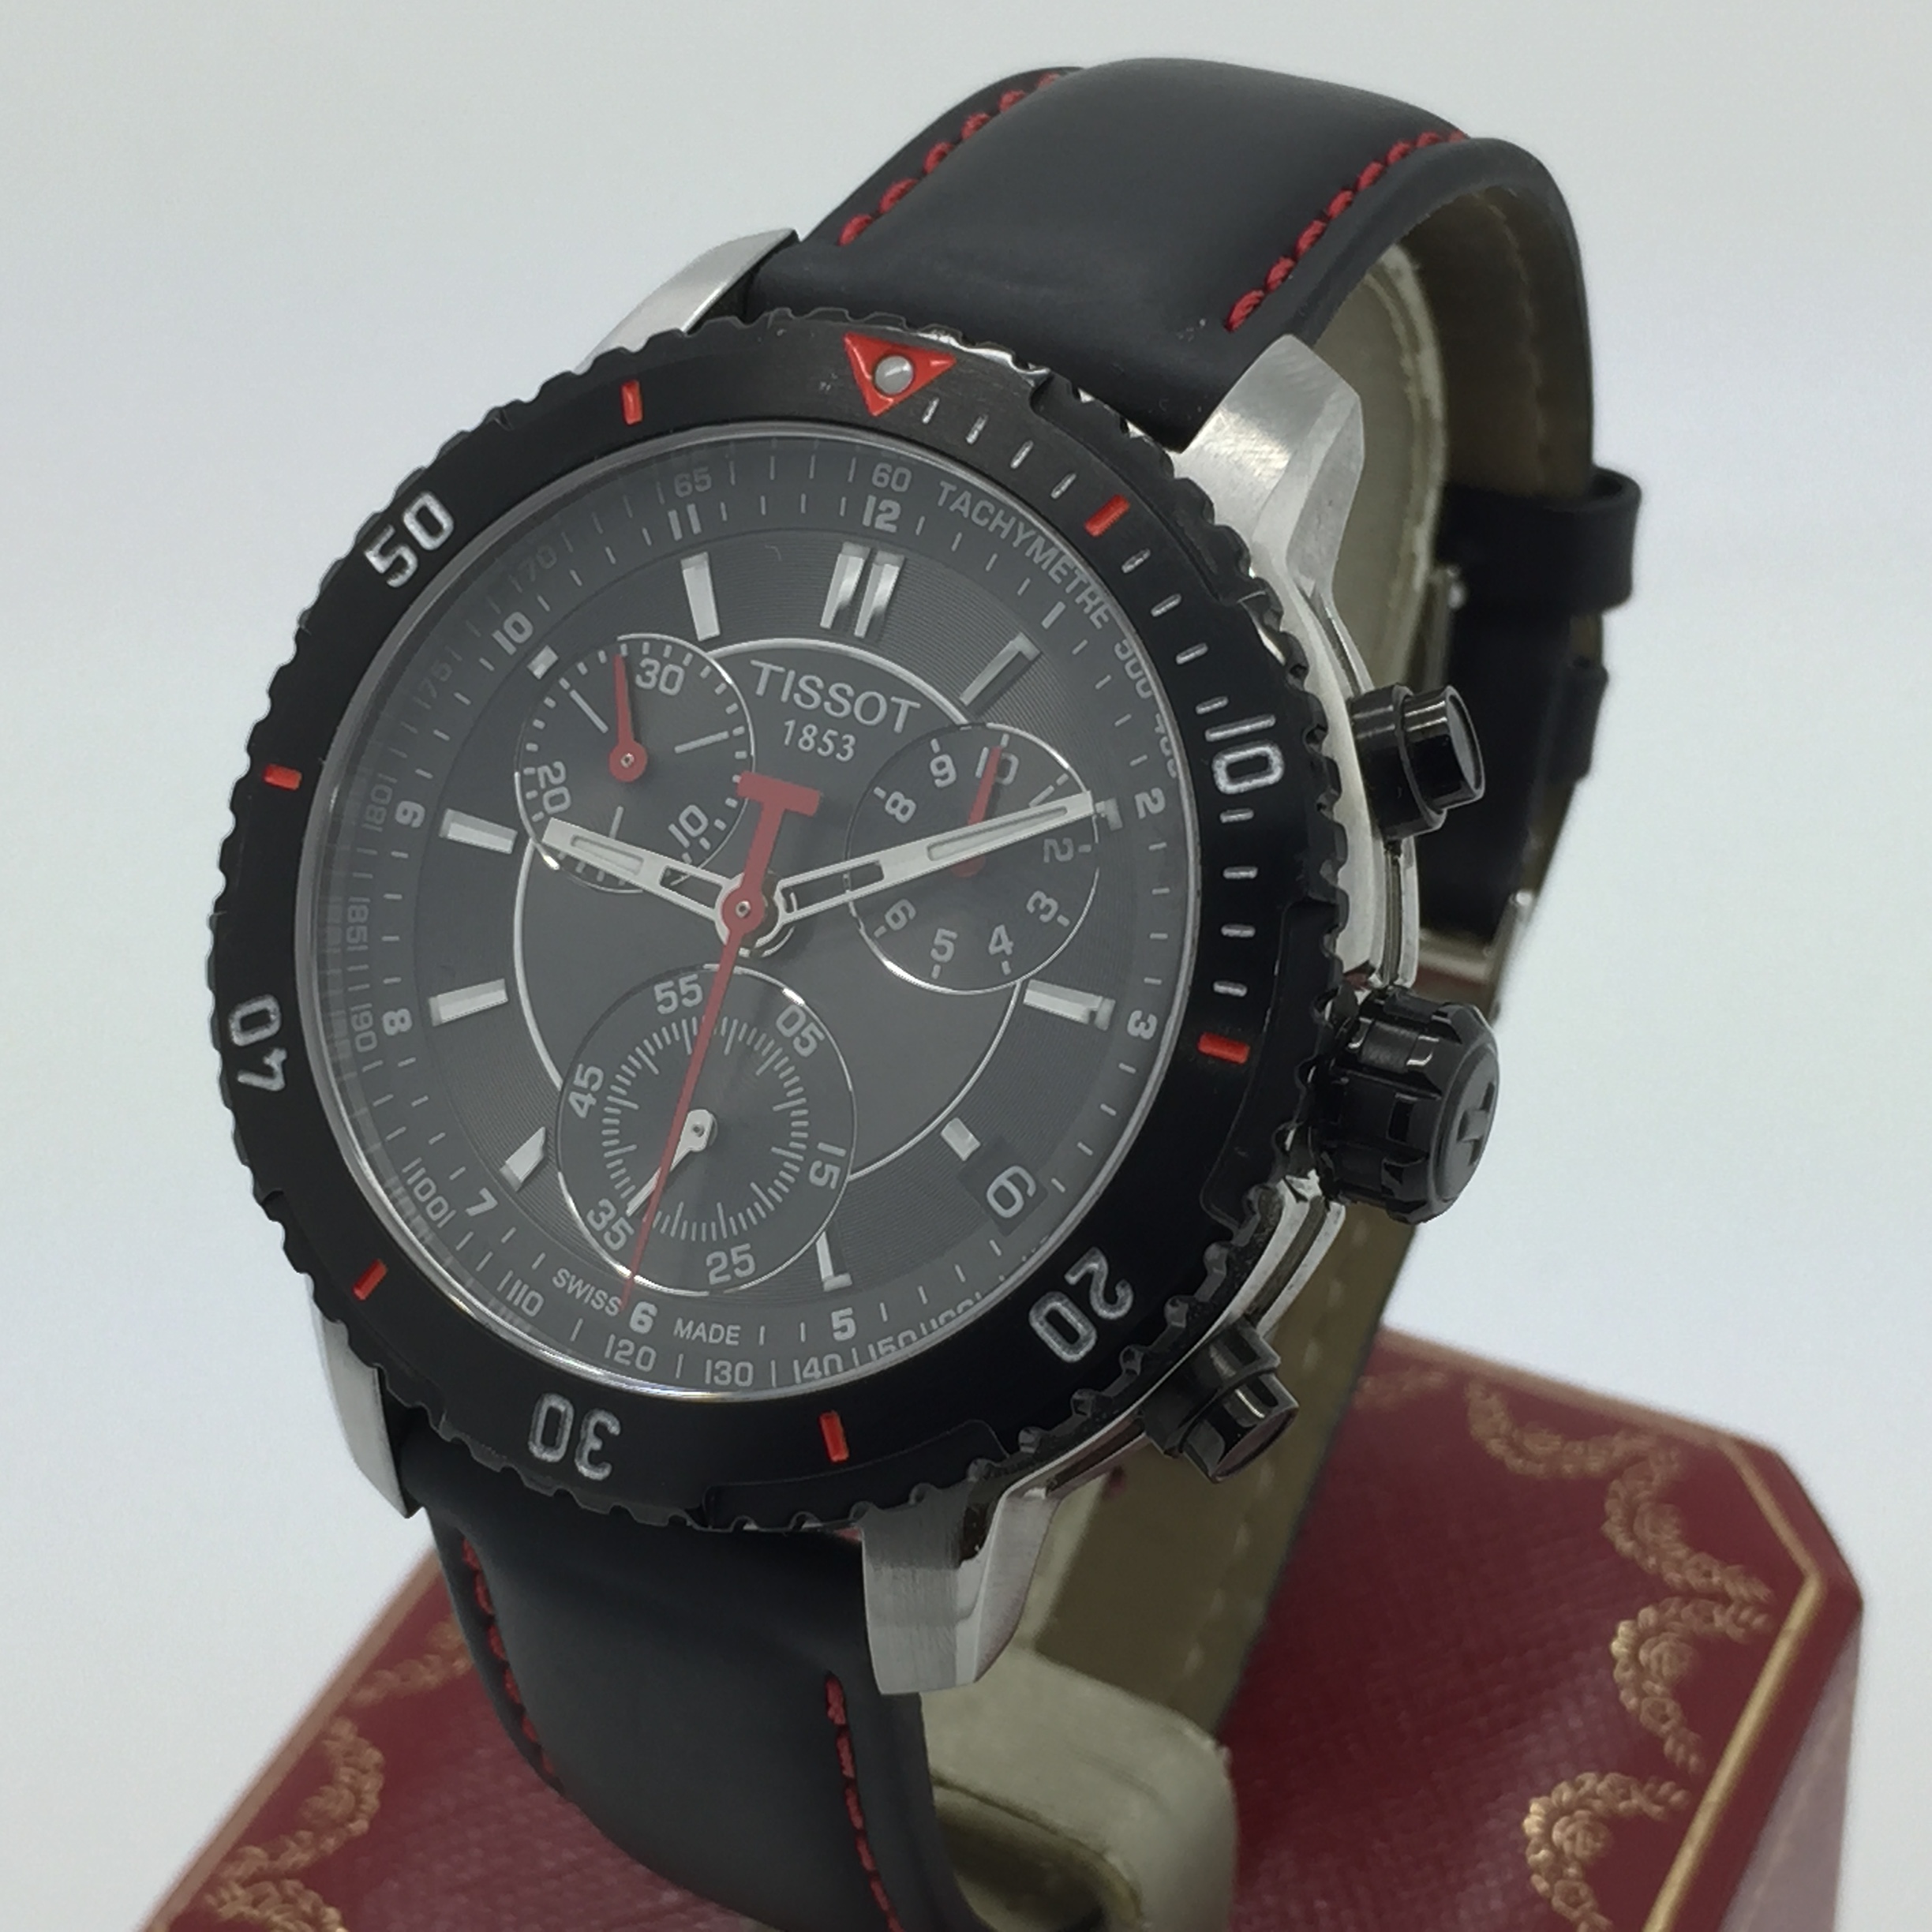 Tissot 1853 Black Dial Mens Chronograph Quartz Watch w/ Red Accents | eBay